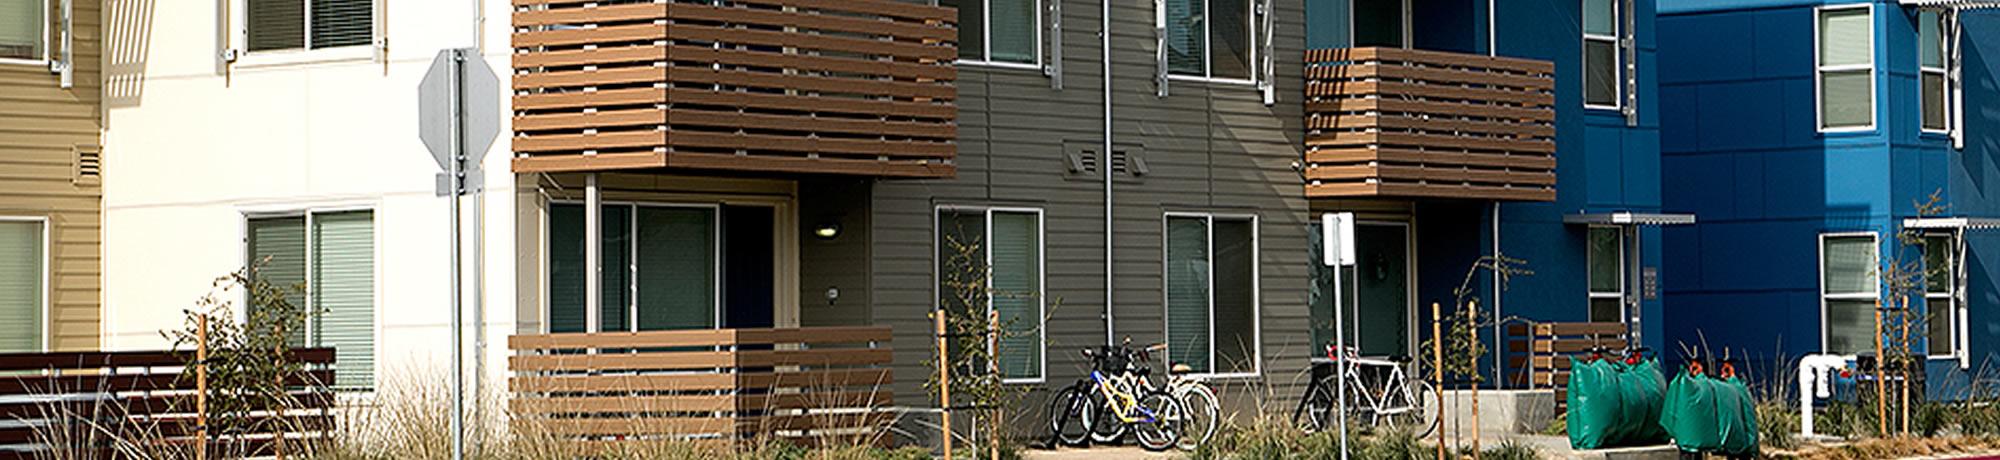 UC Davis West Village Apartments